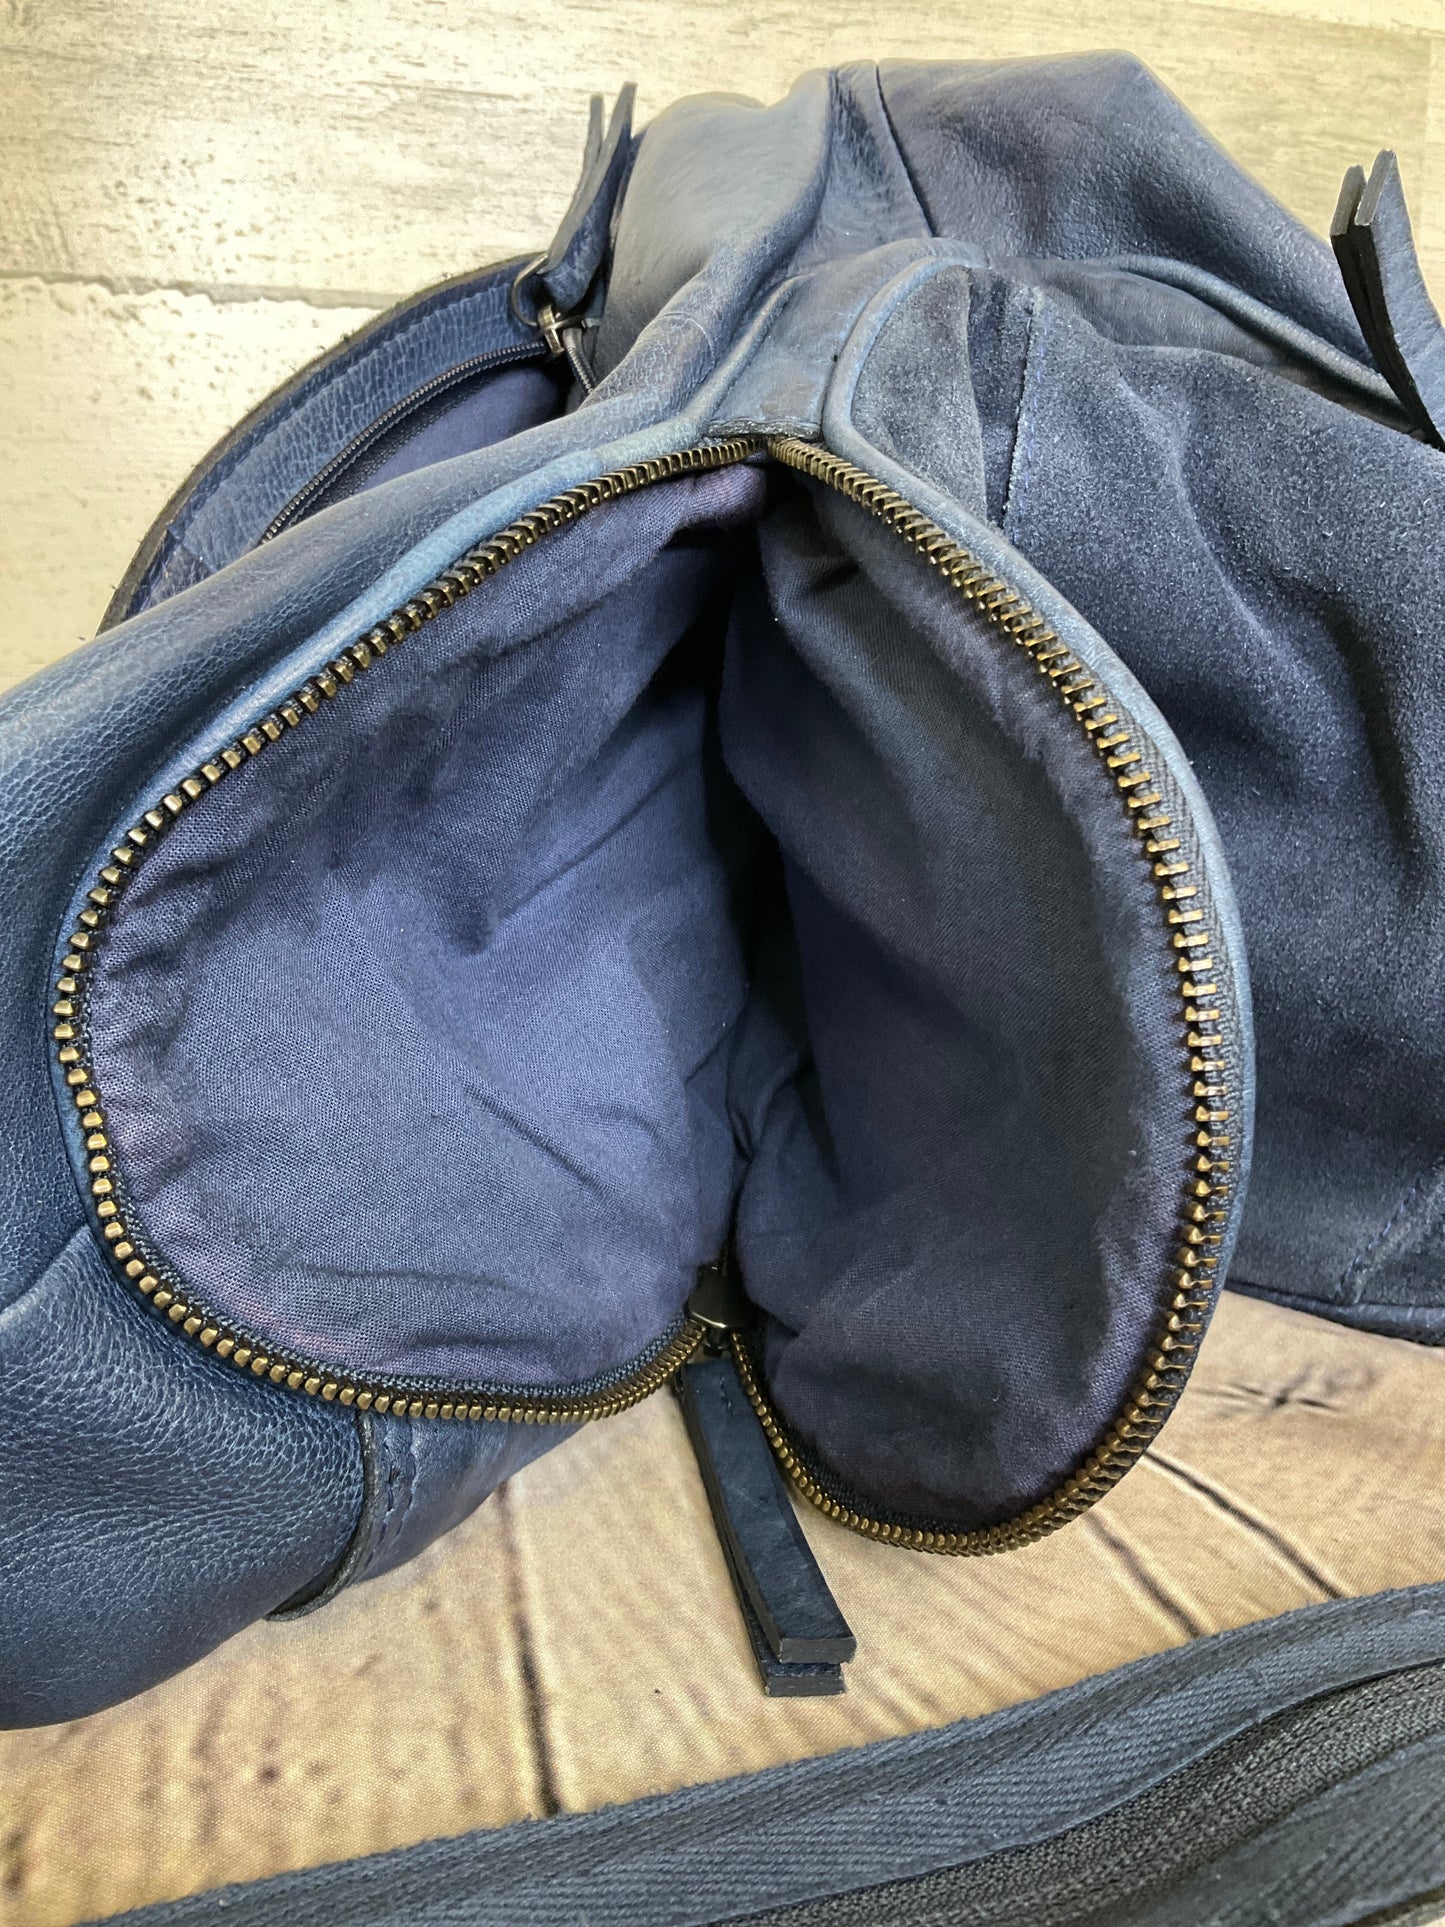 Backpack Free People, Size Medium